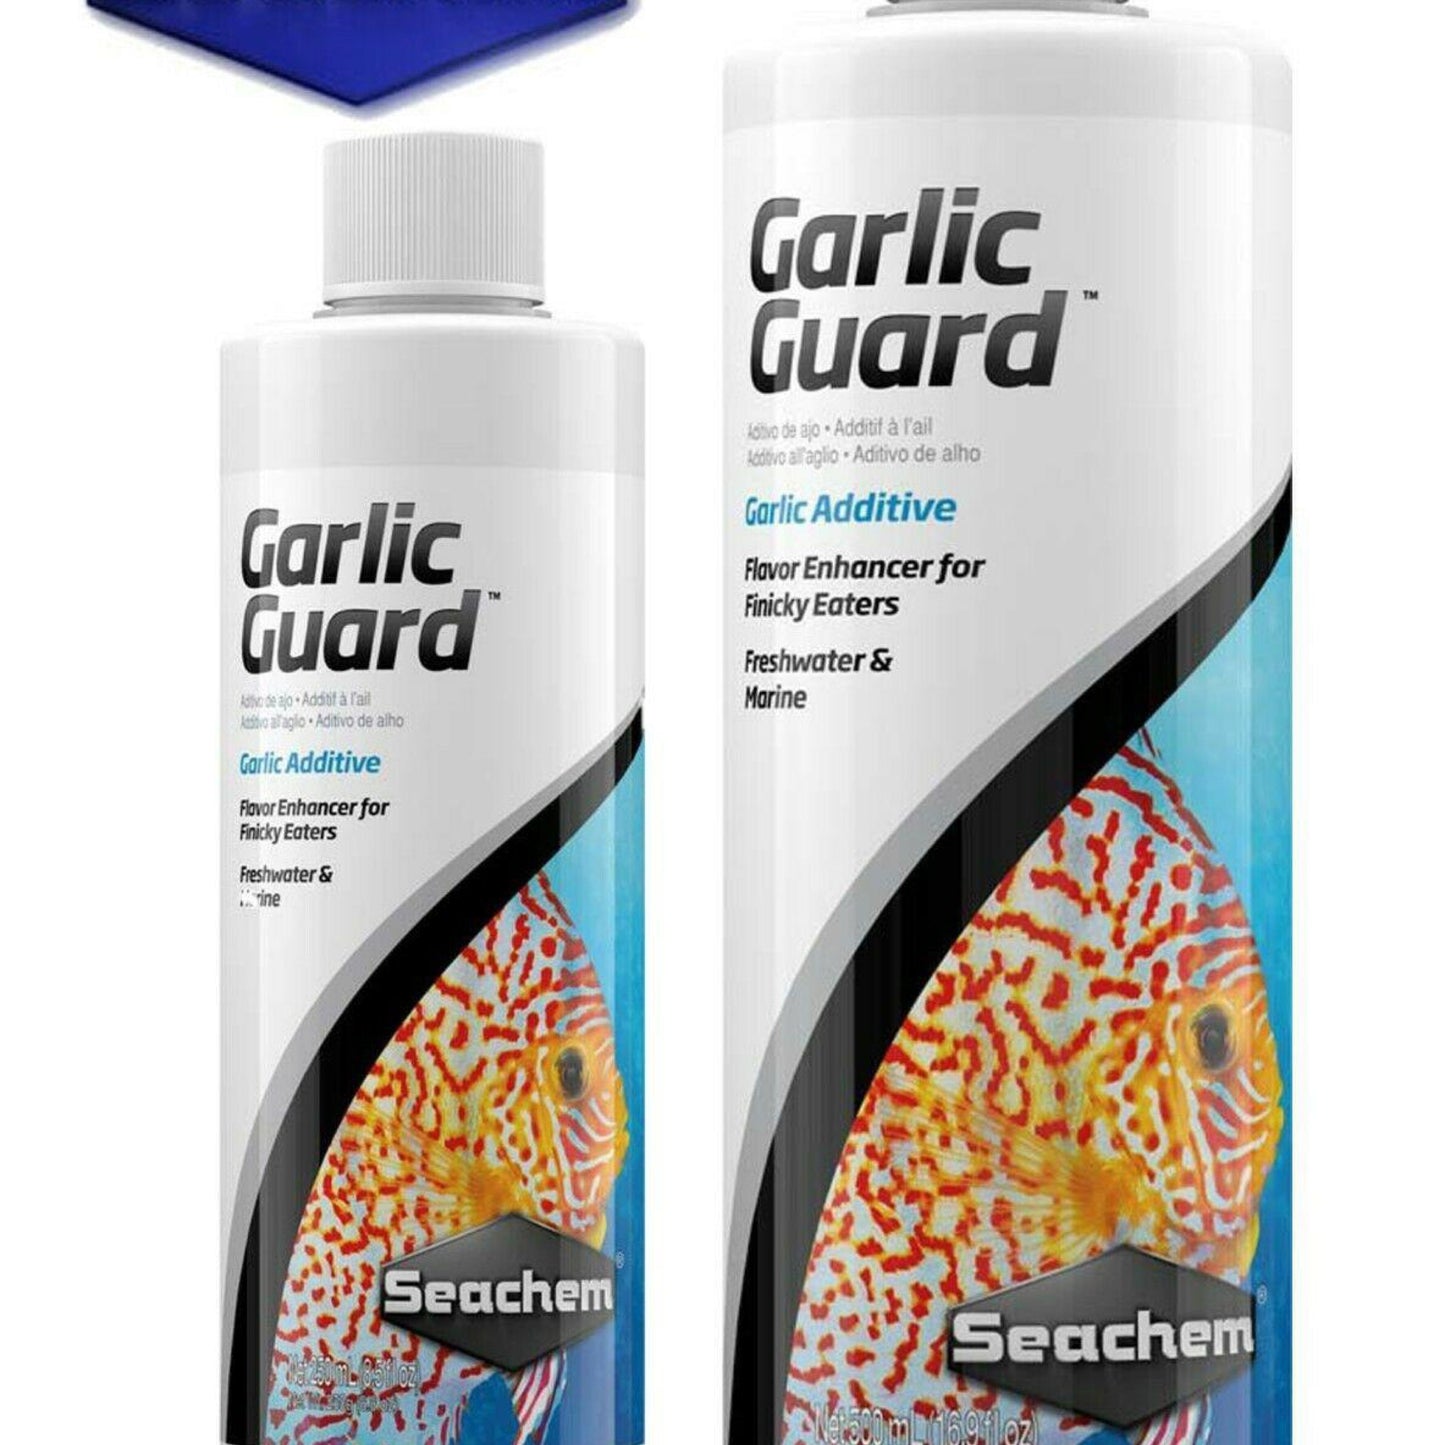 Seachem Garlicguard 250 ml